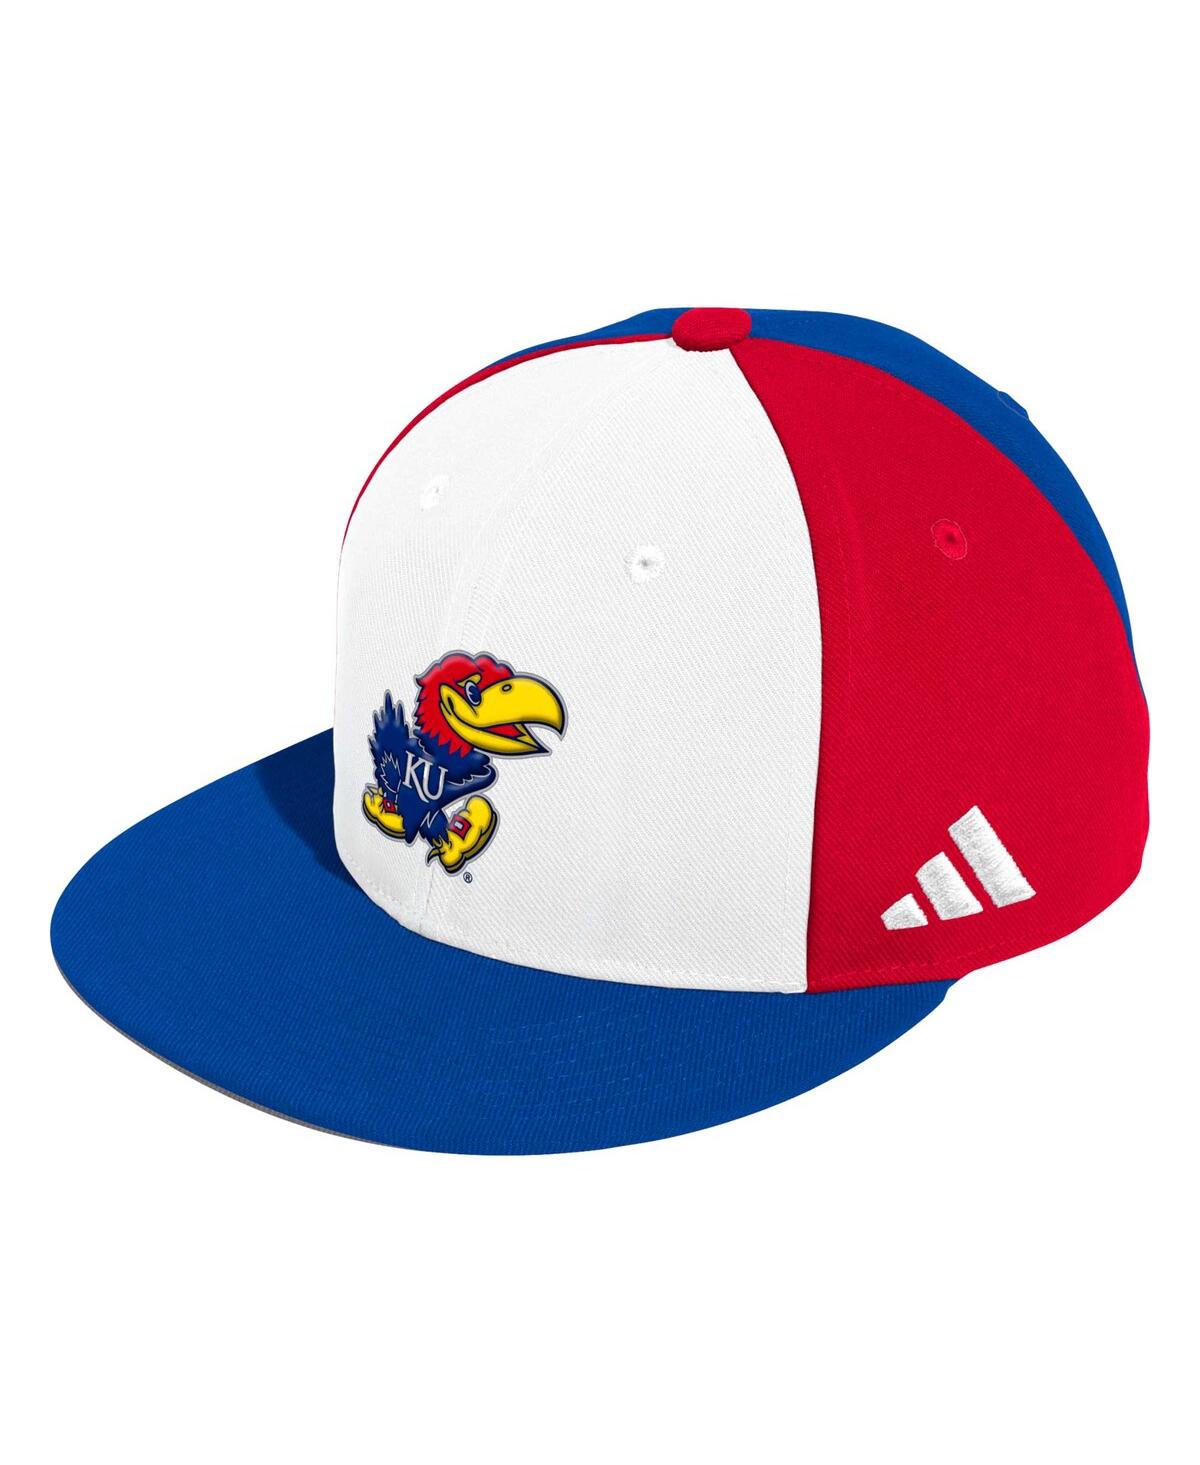 Shop Adidas Originals Men's Adidas White Kansas Jayhawks On-field Baseball Fitted Hat